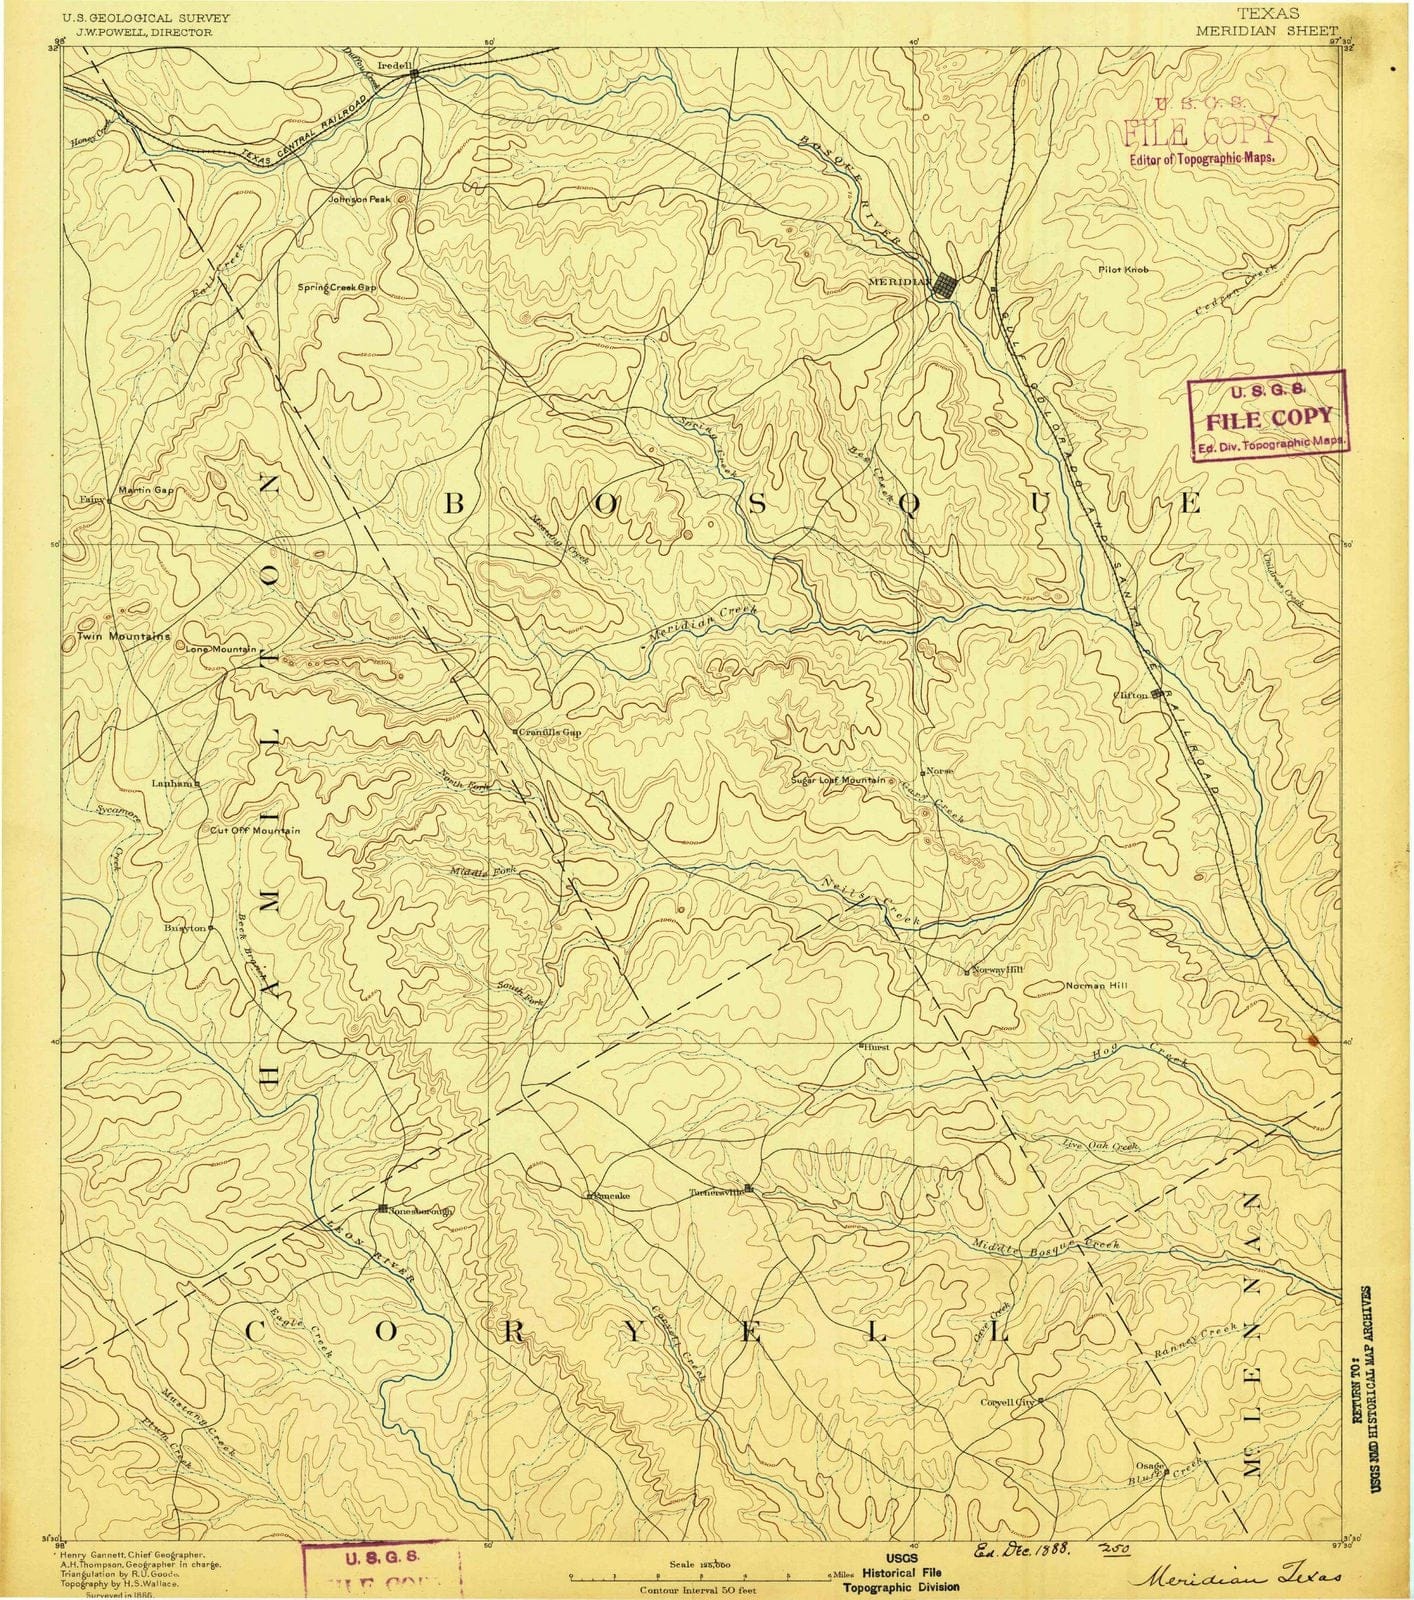 1888 Meridian, TX - Texas - USGS Topographic Map